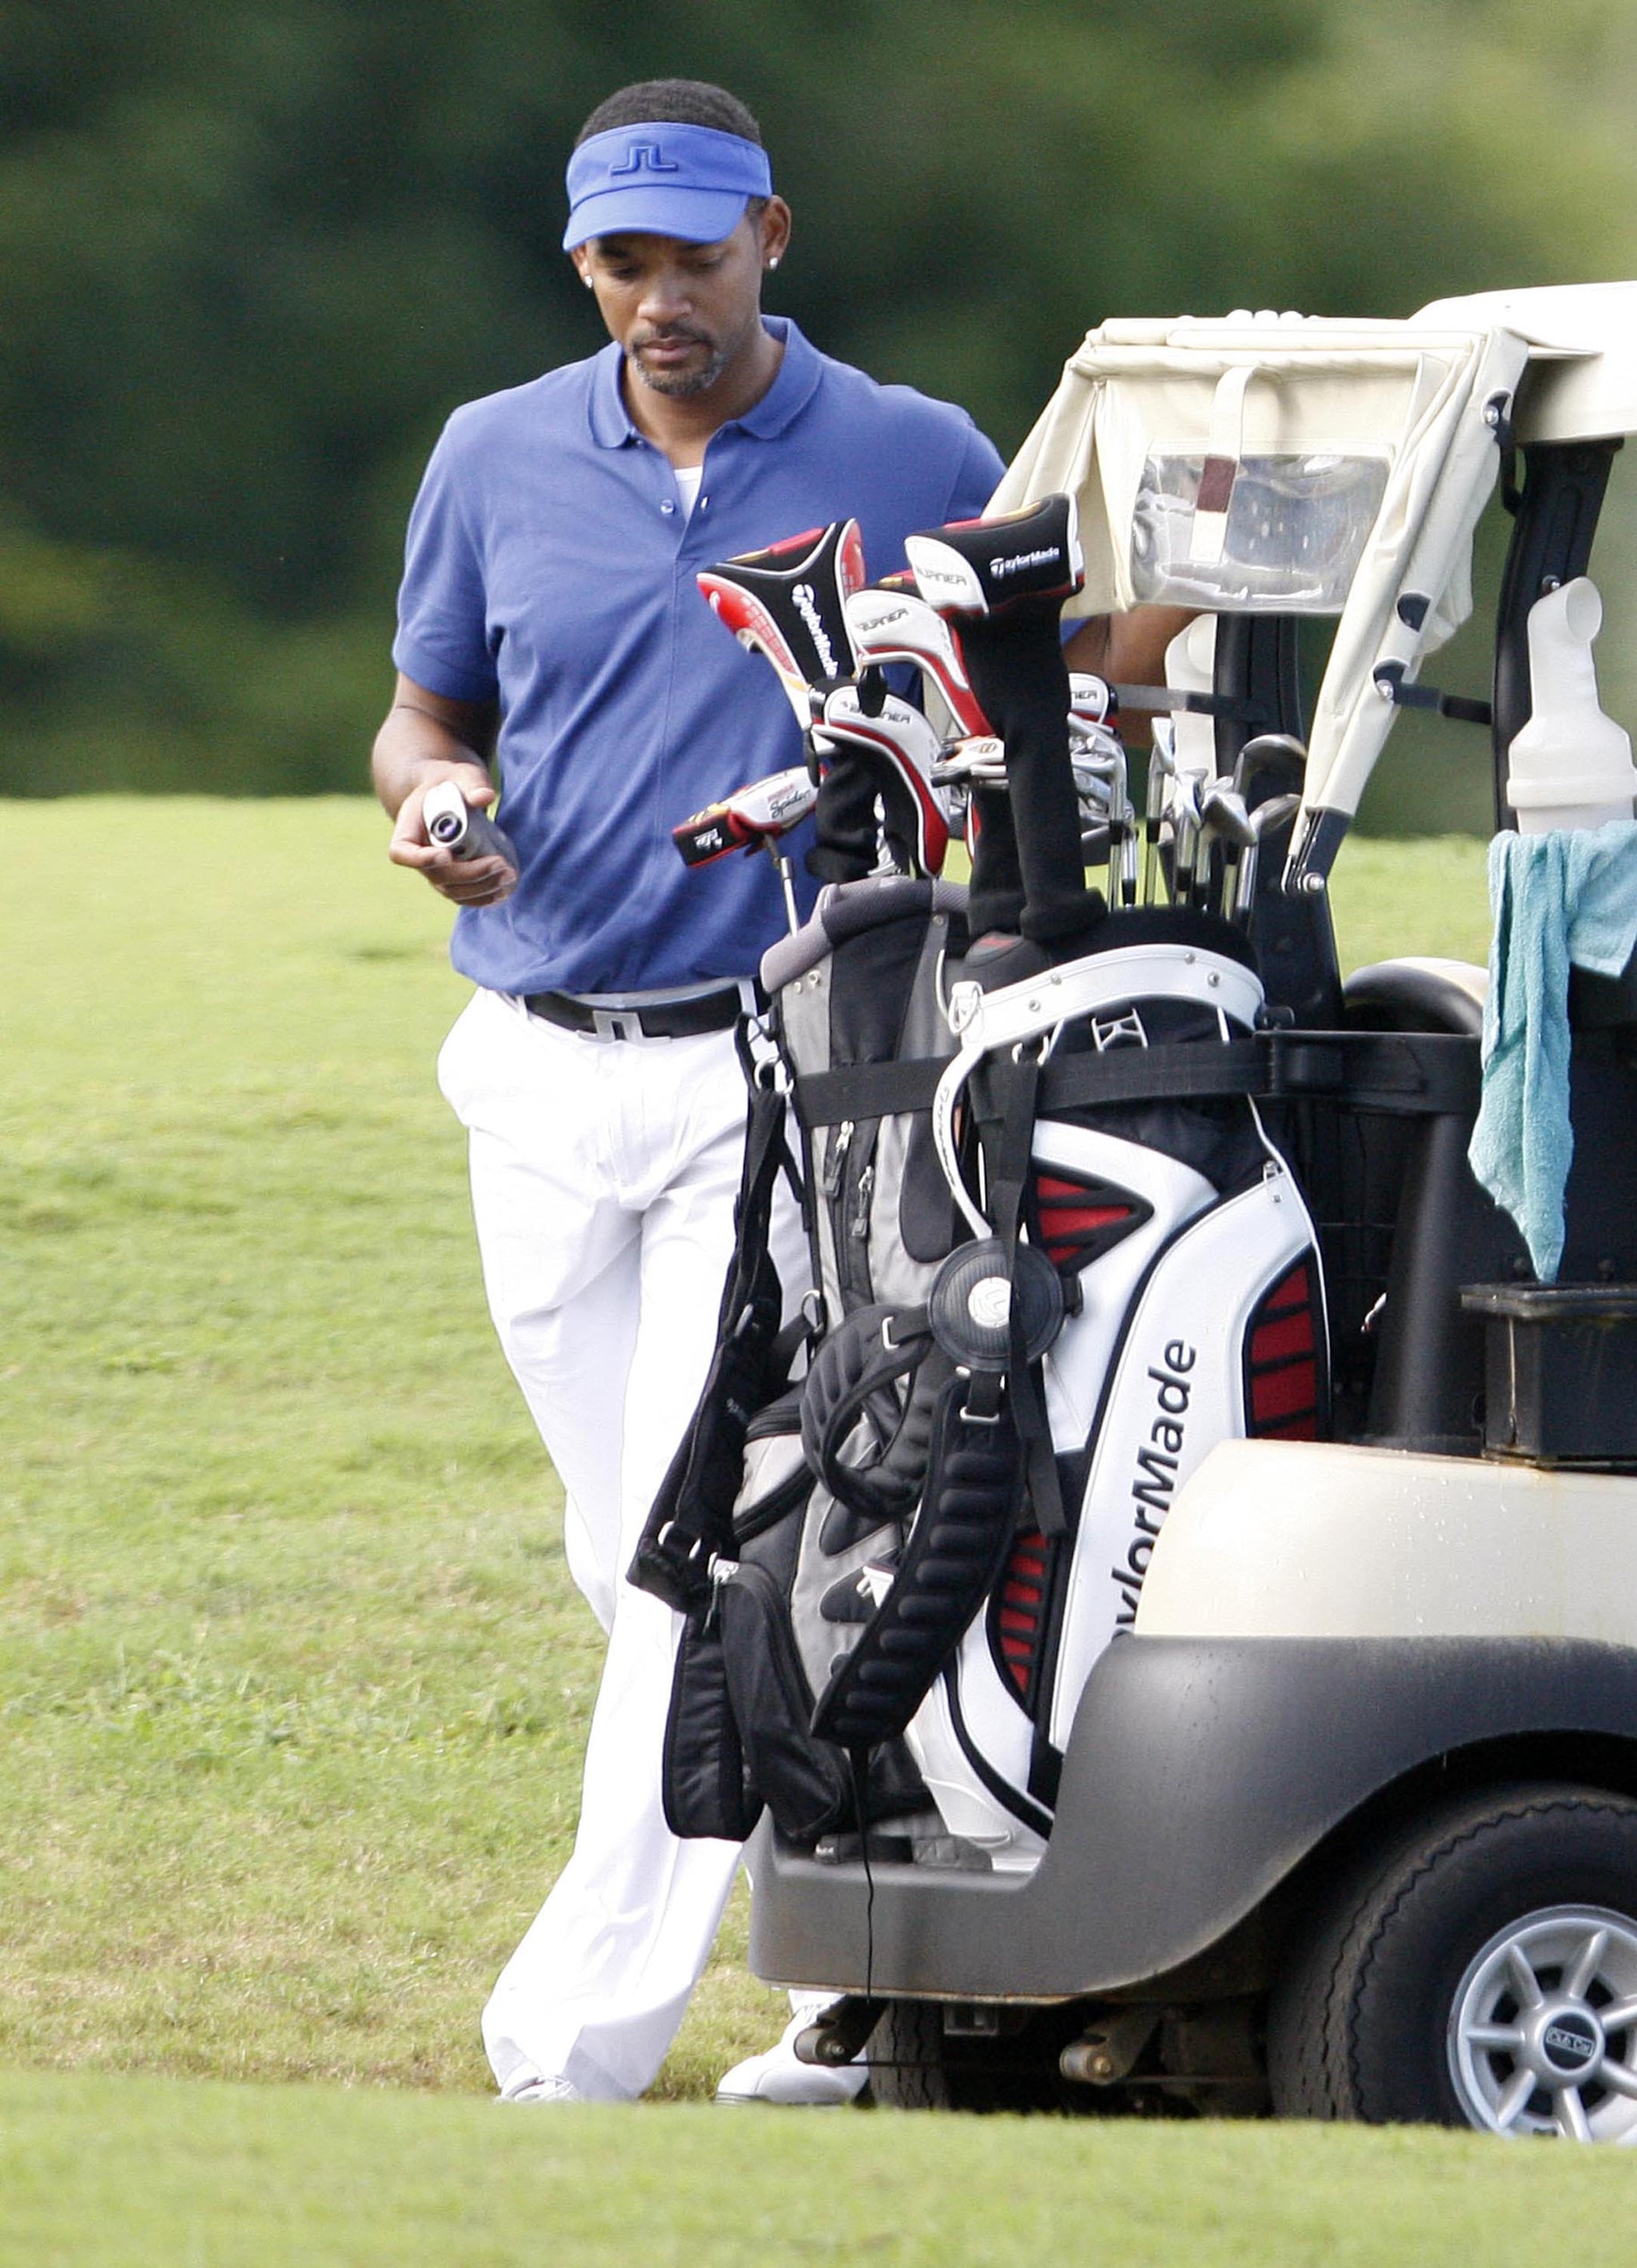 Will Smith Golfing